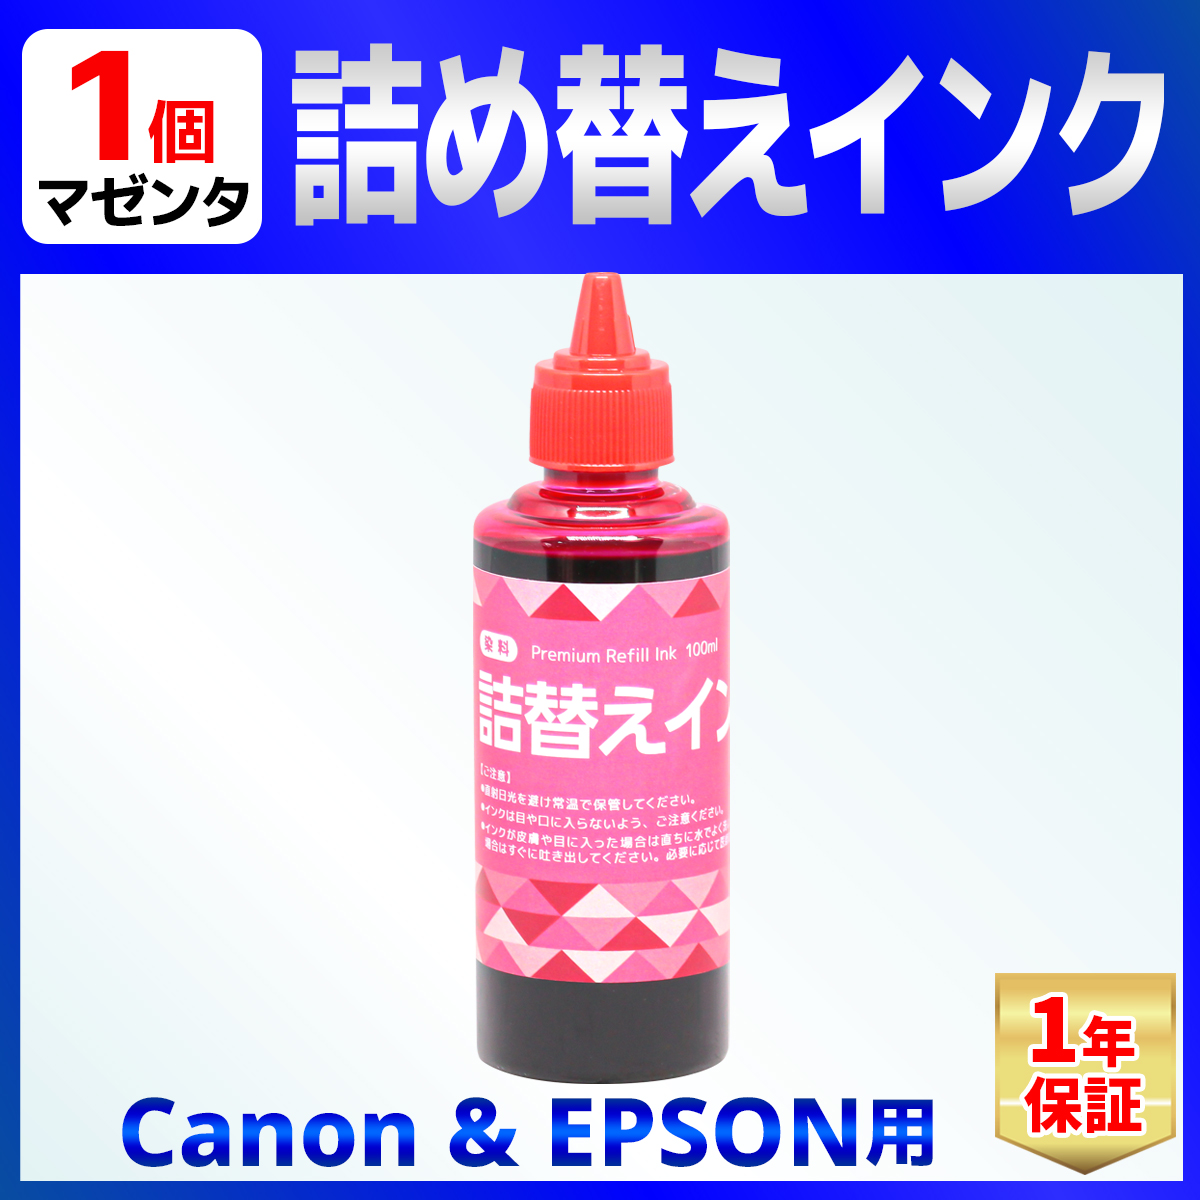 CANON/EPSON用 詰め替え インク ユニバーサルインク 100ml 染料 マゼンタ